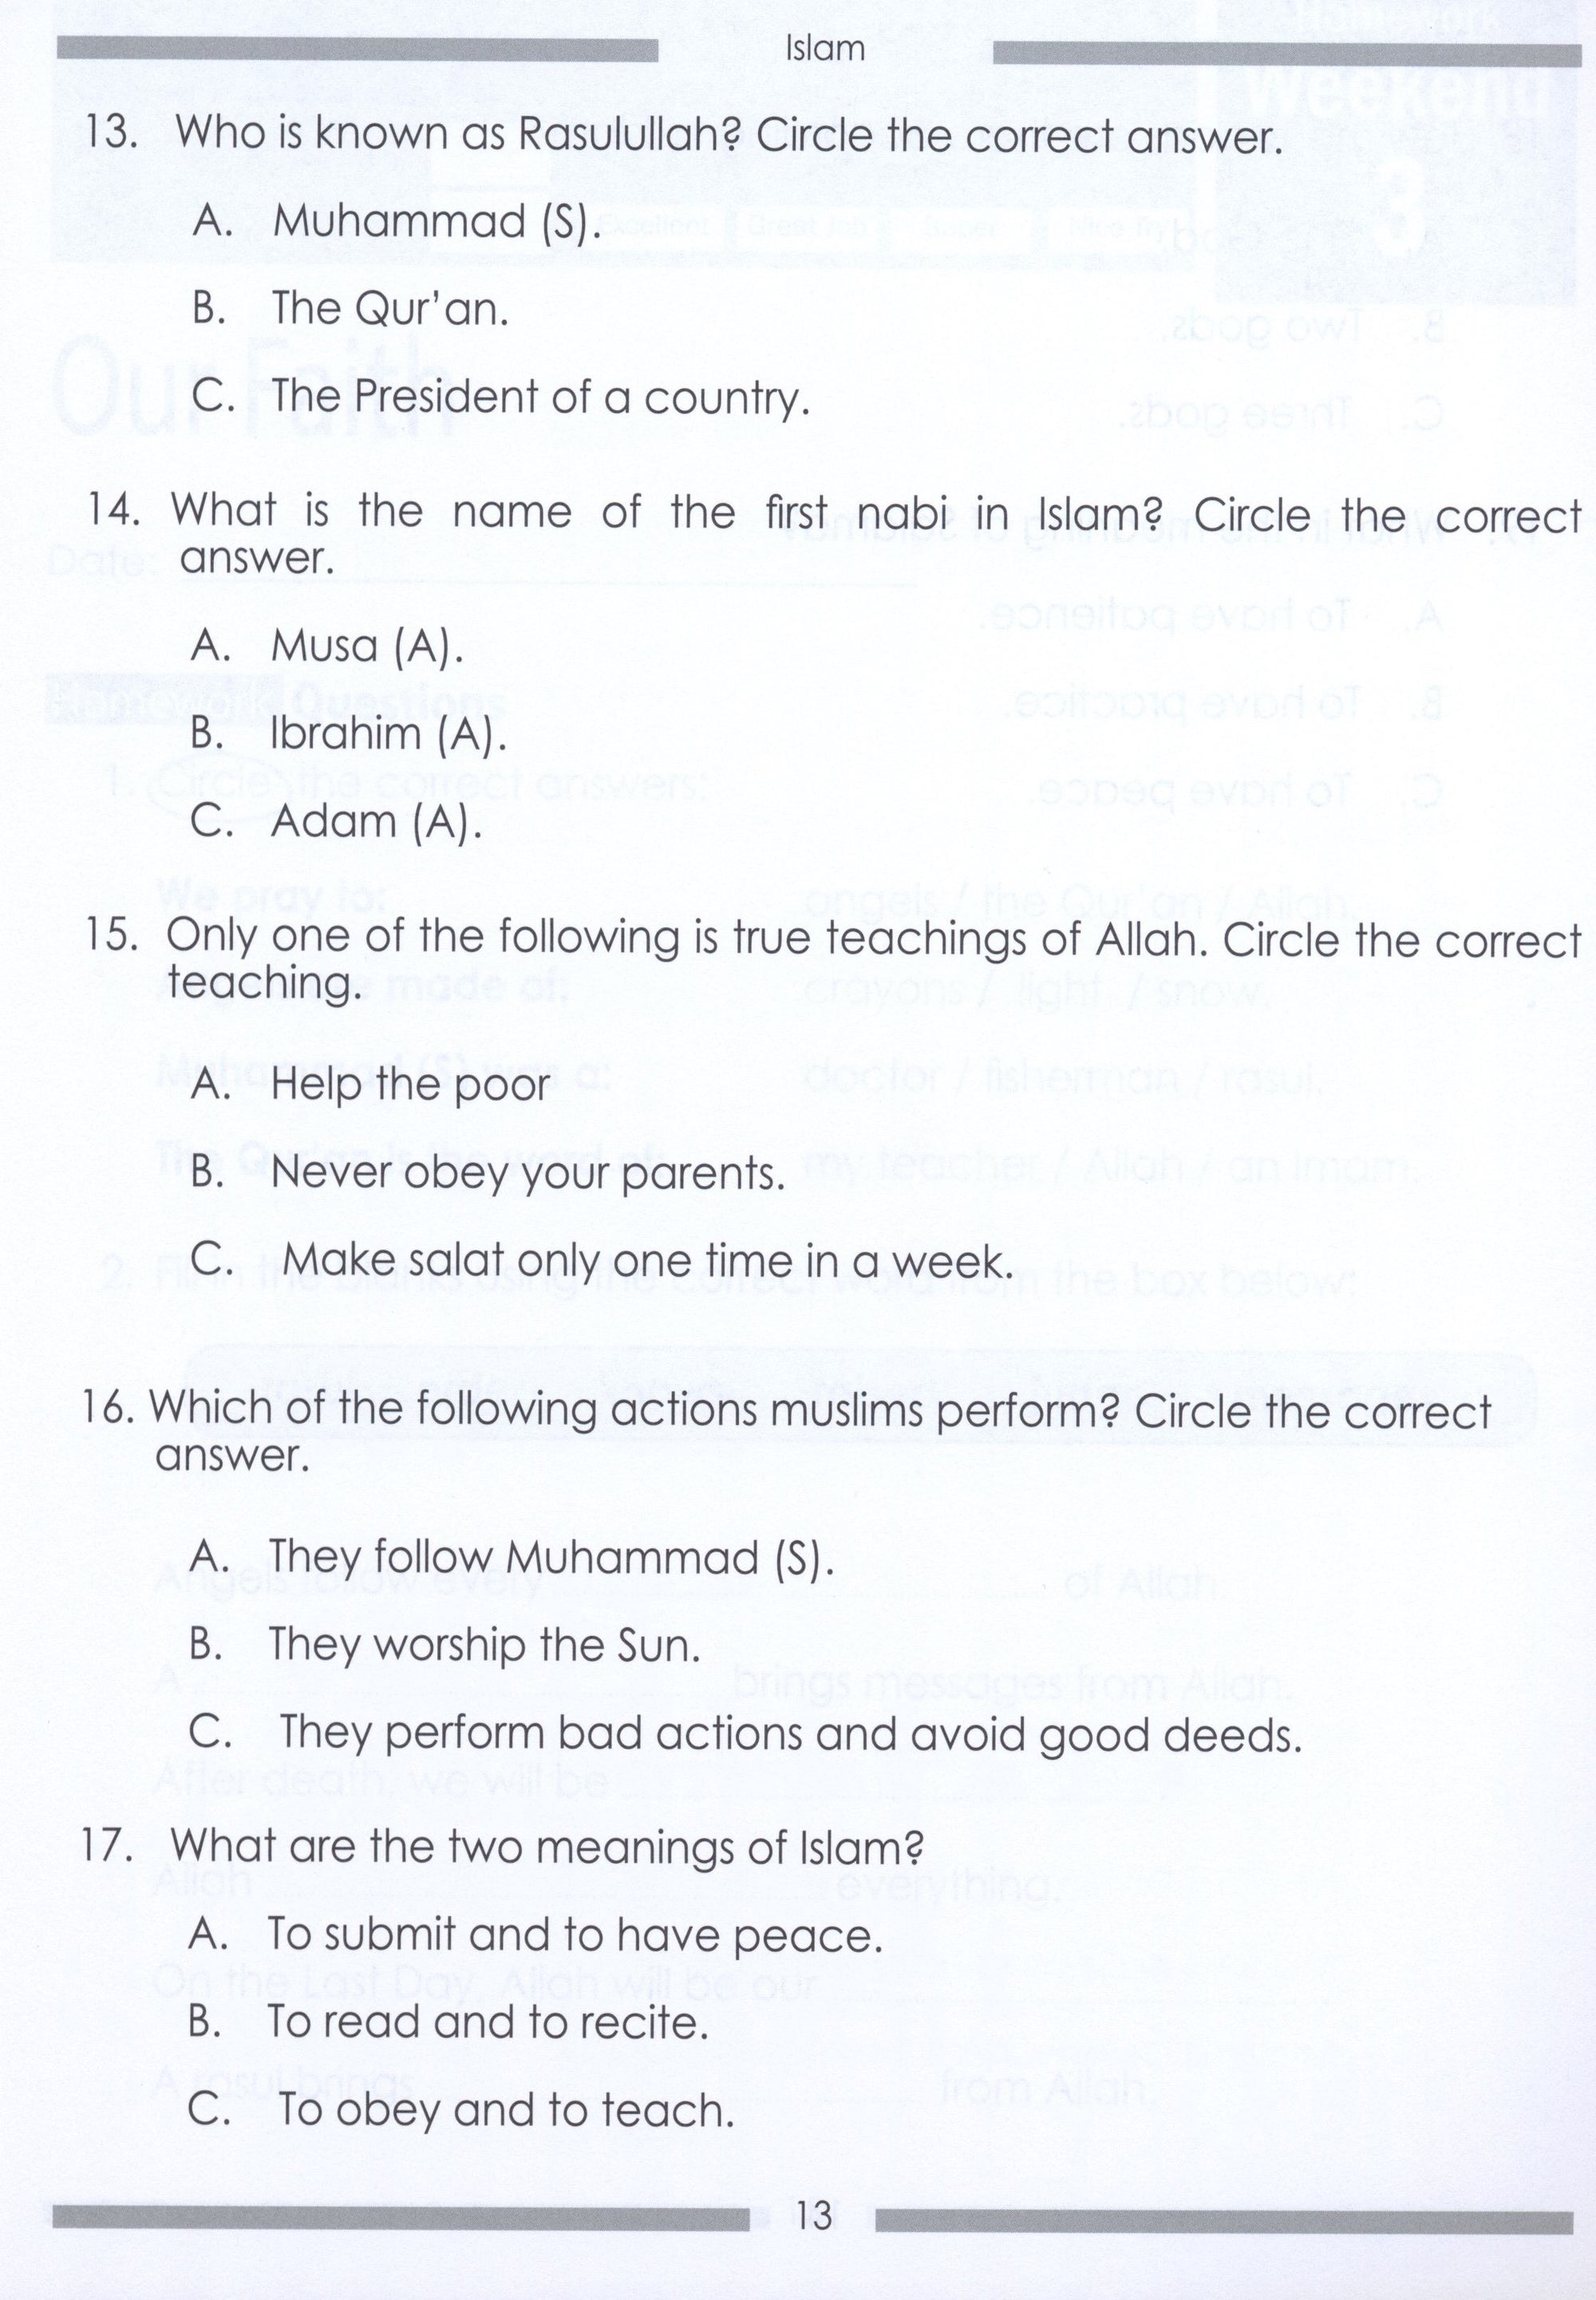 Weekend Learning Islamic Studies Workbook Level 1